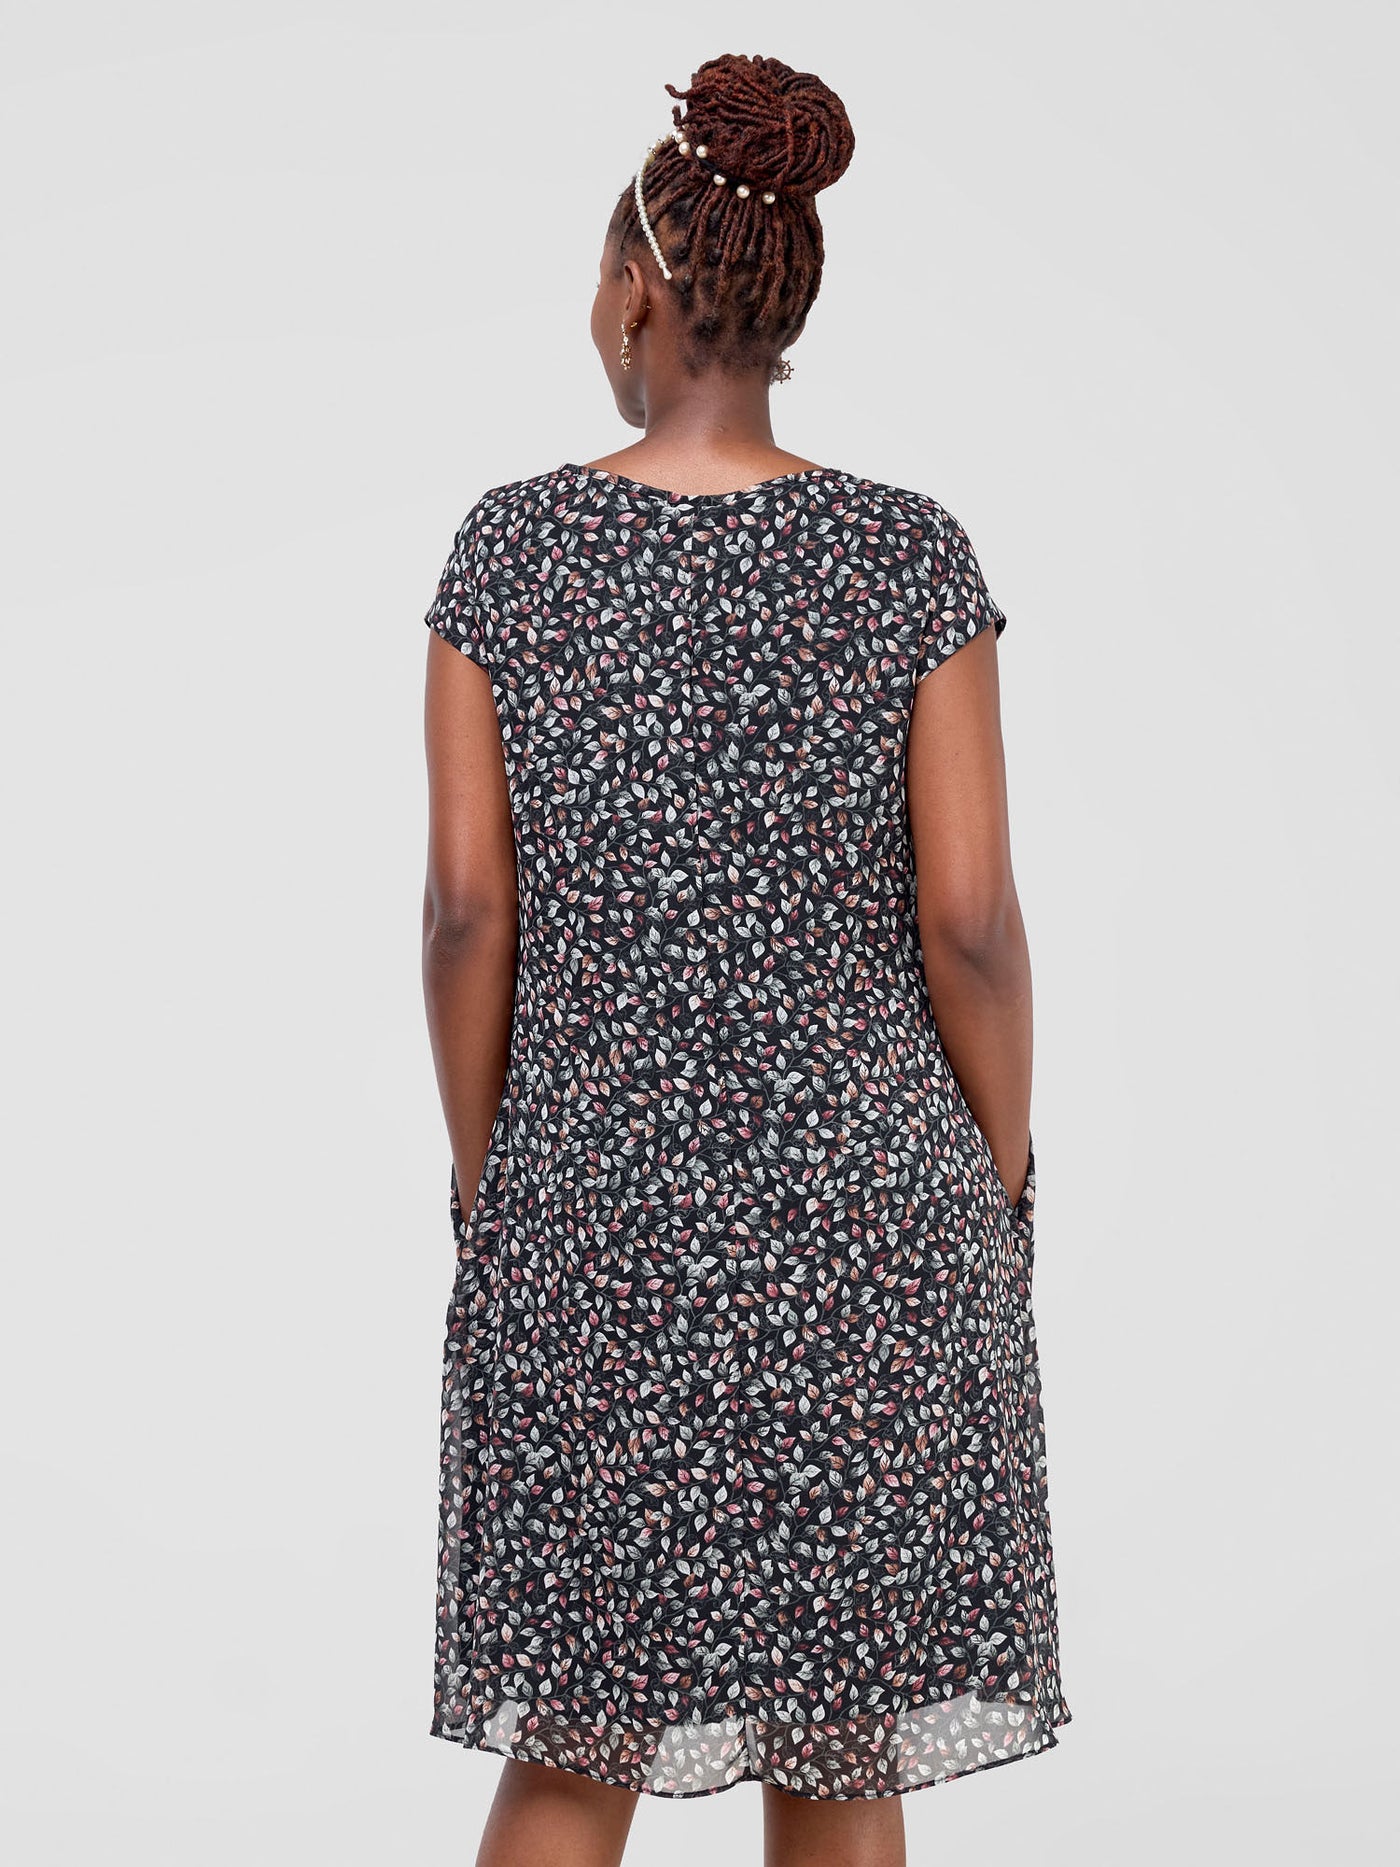 Vivo Sierra Cap Sleeve Tent Chiffon Dress - Black Floral Print